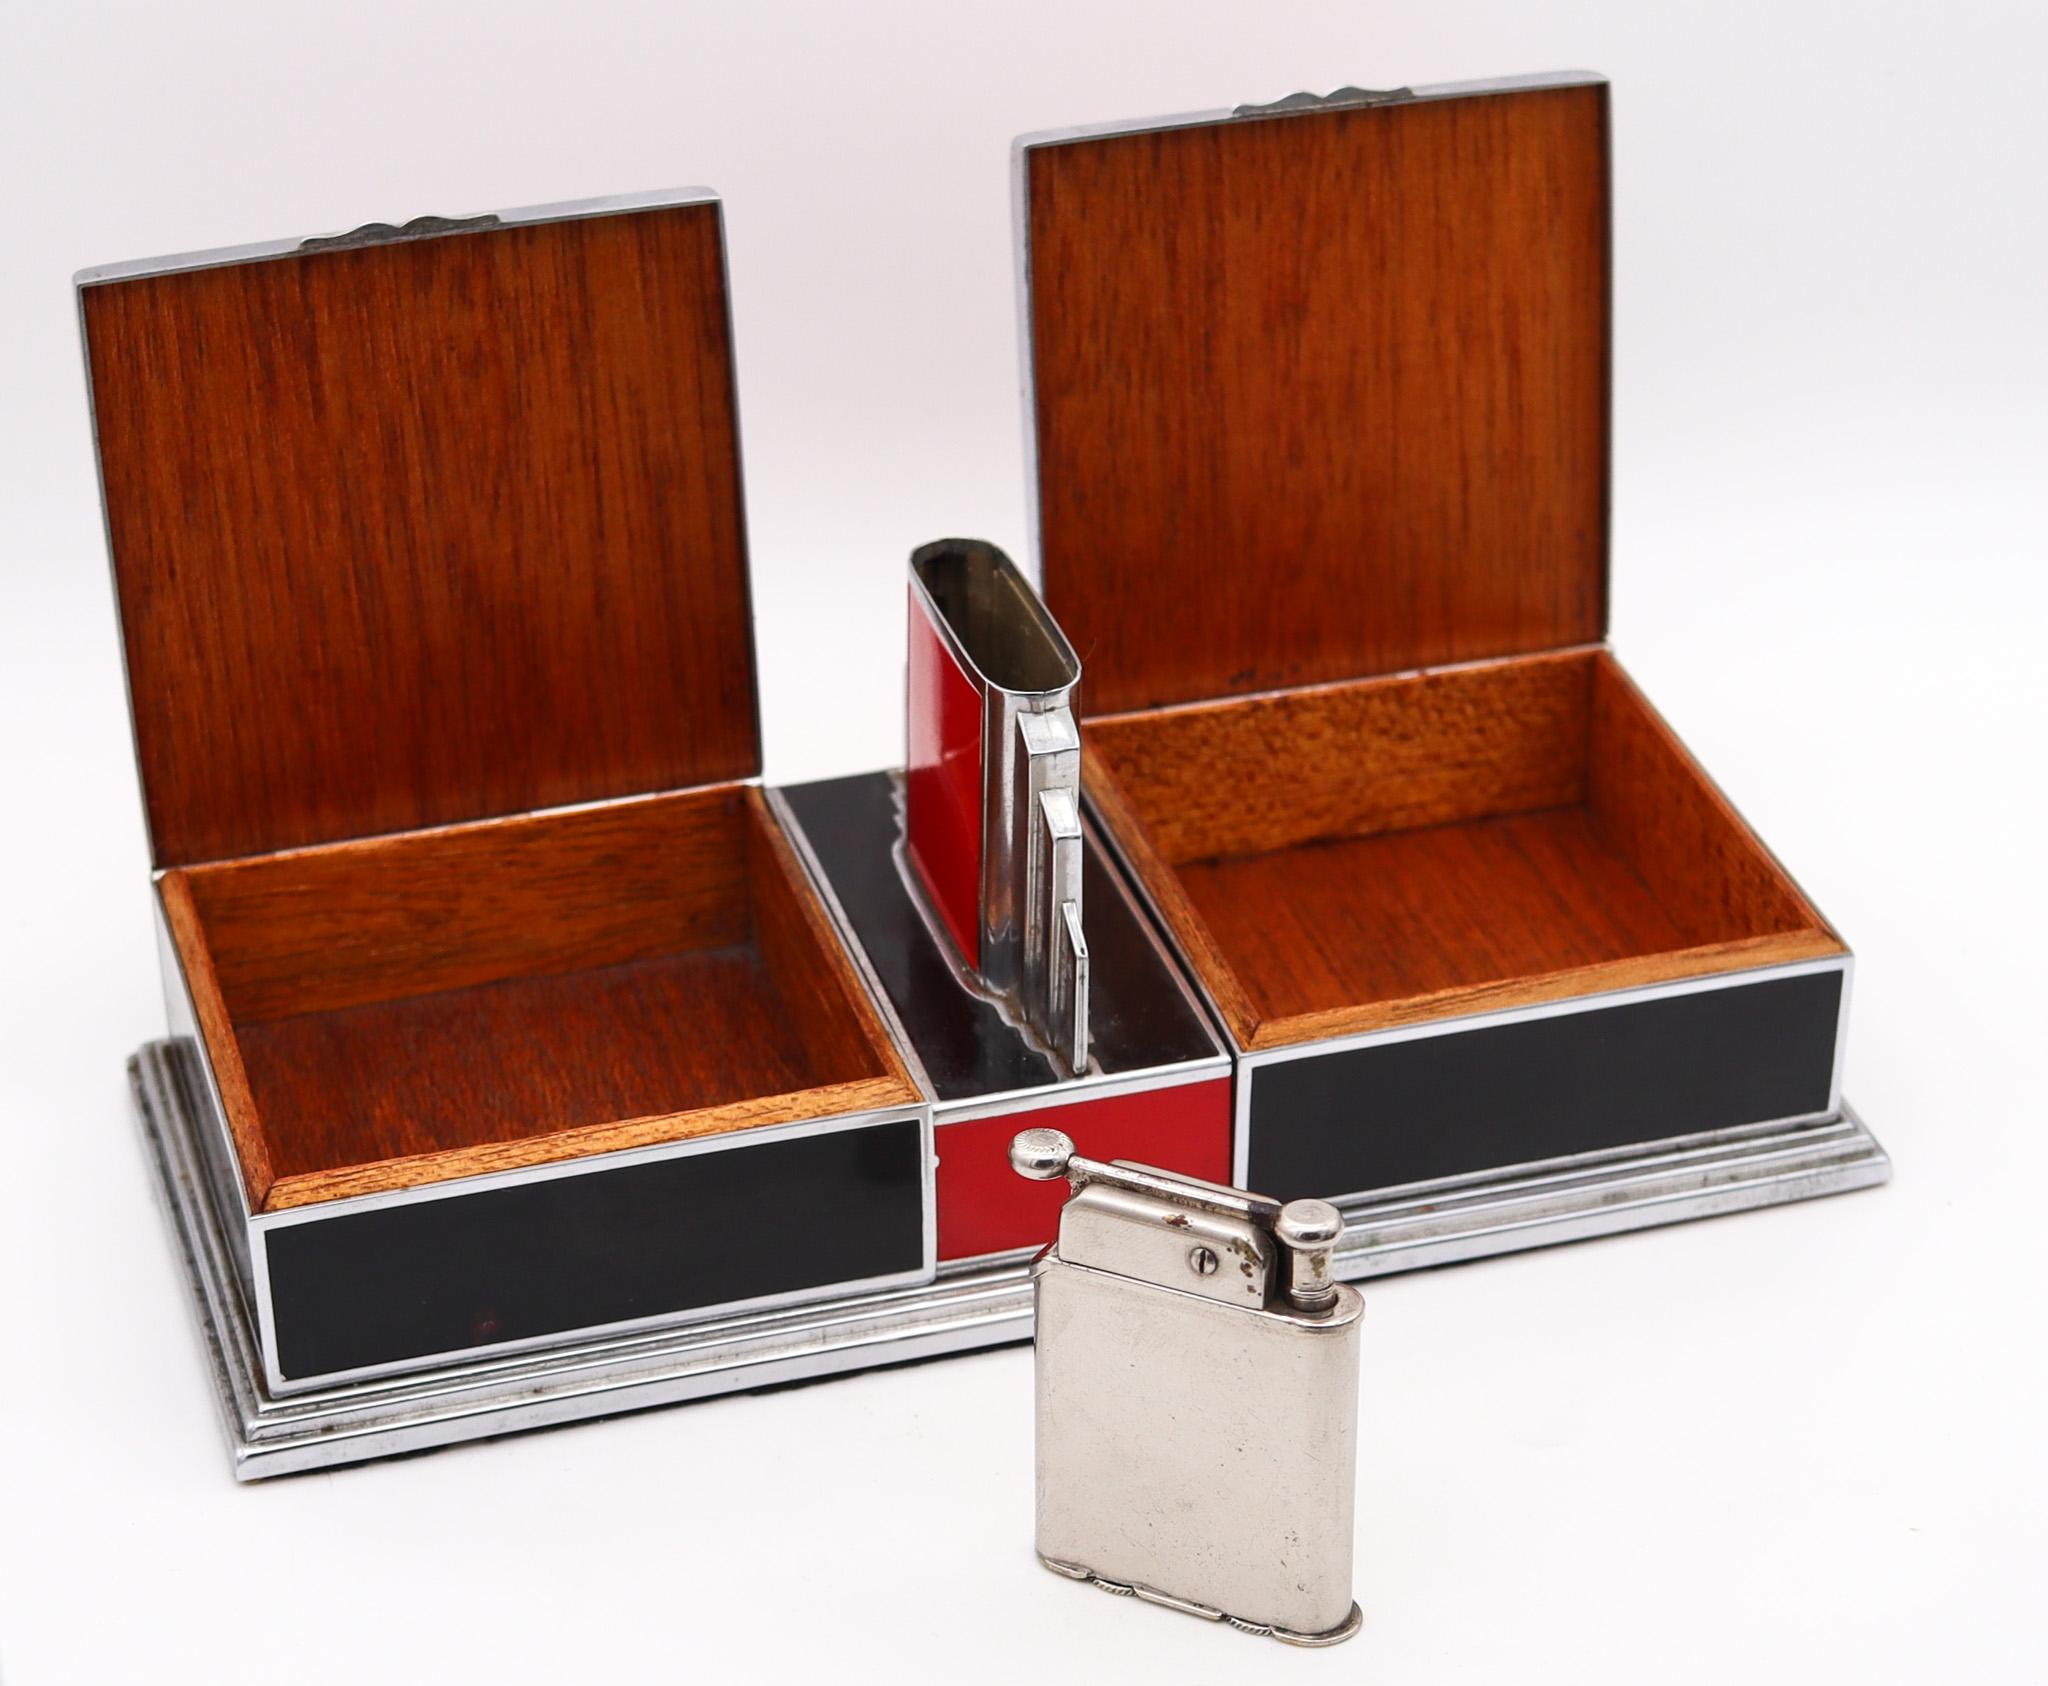 Otis Elgin Craft 1928 Art Deco Desk Cigarette Box And Lighter In Lacquered Steel In Excellent Condition For Sale In Miami, FL